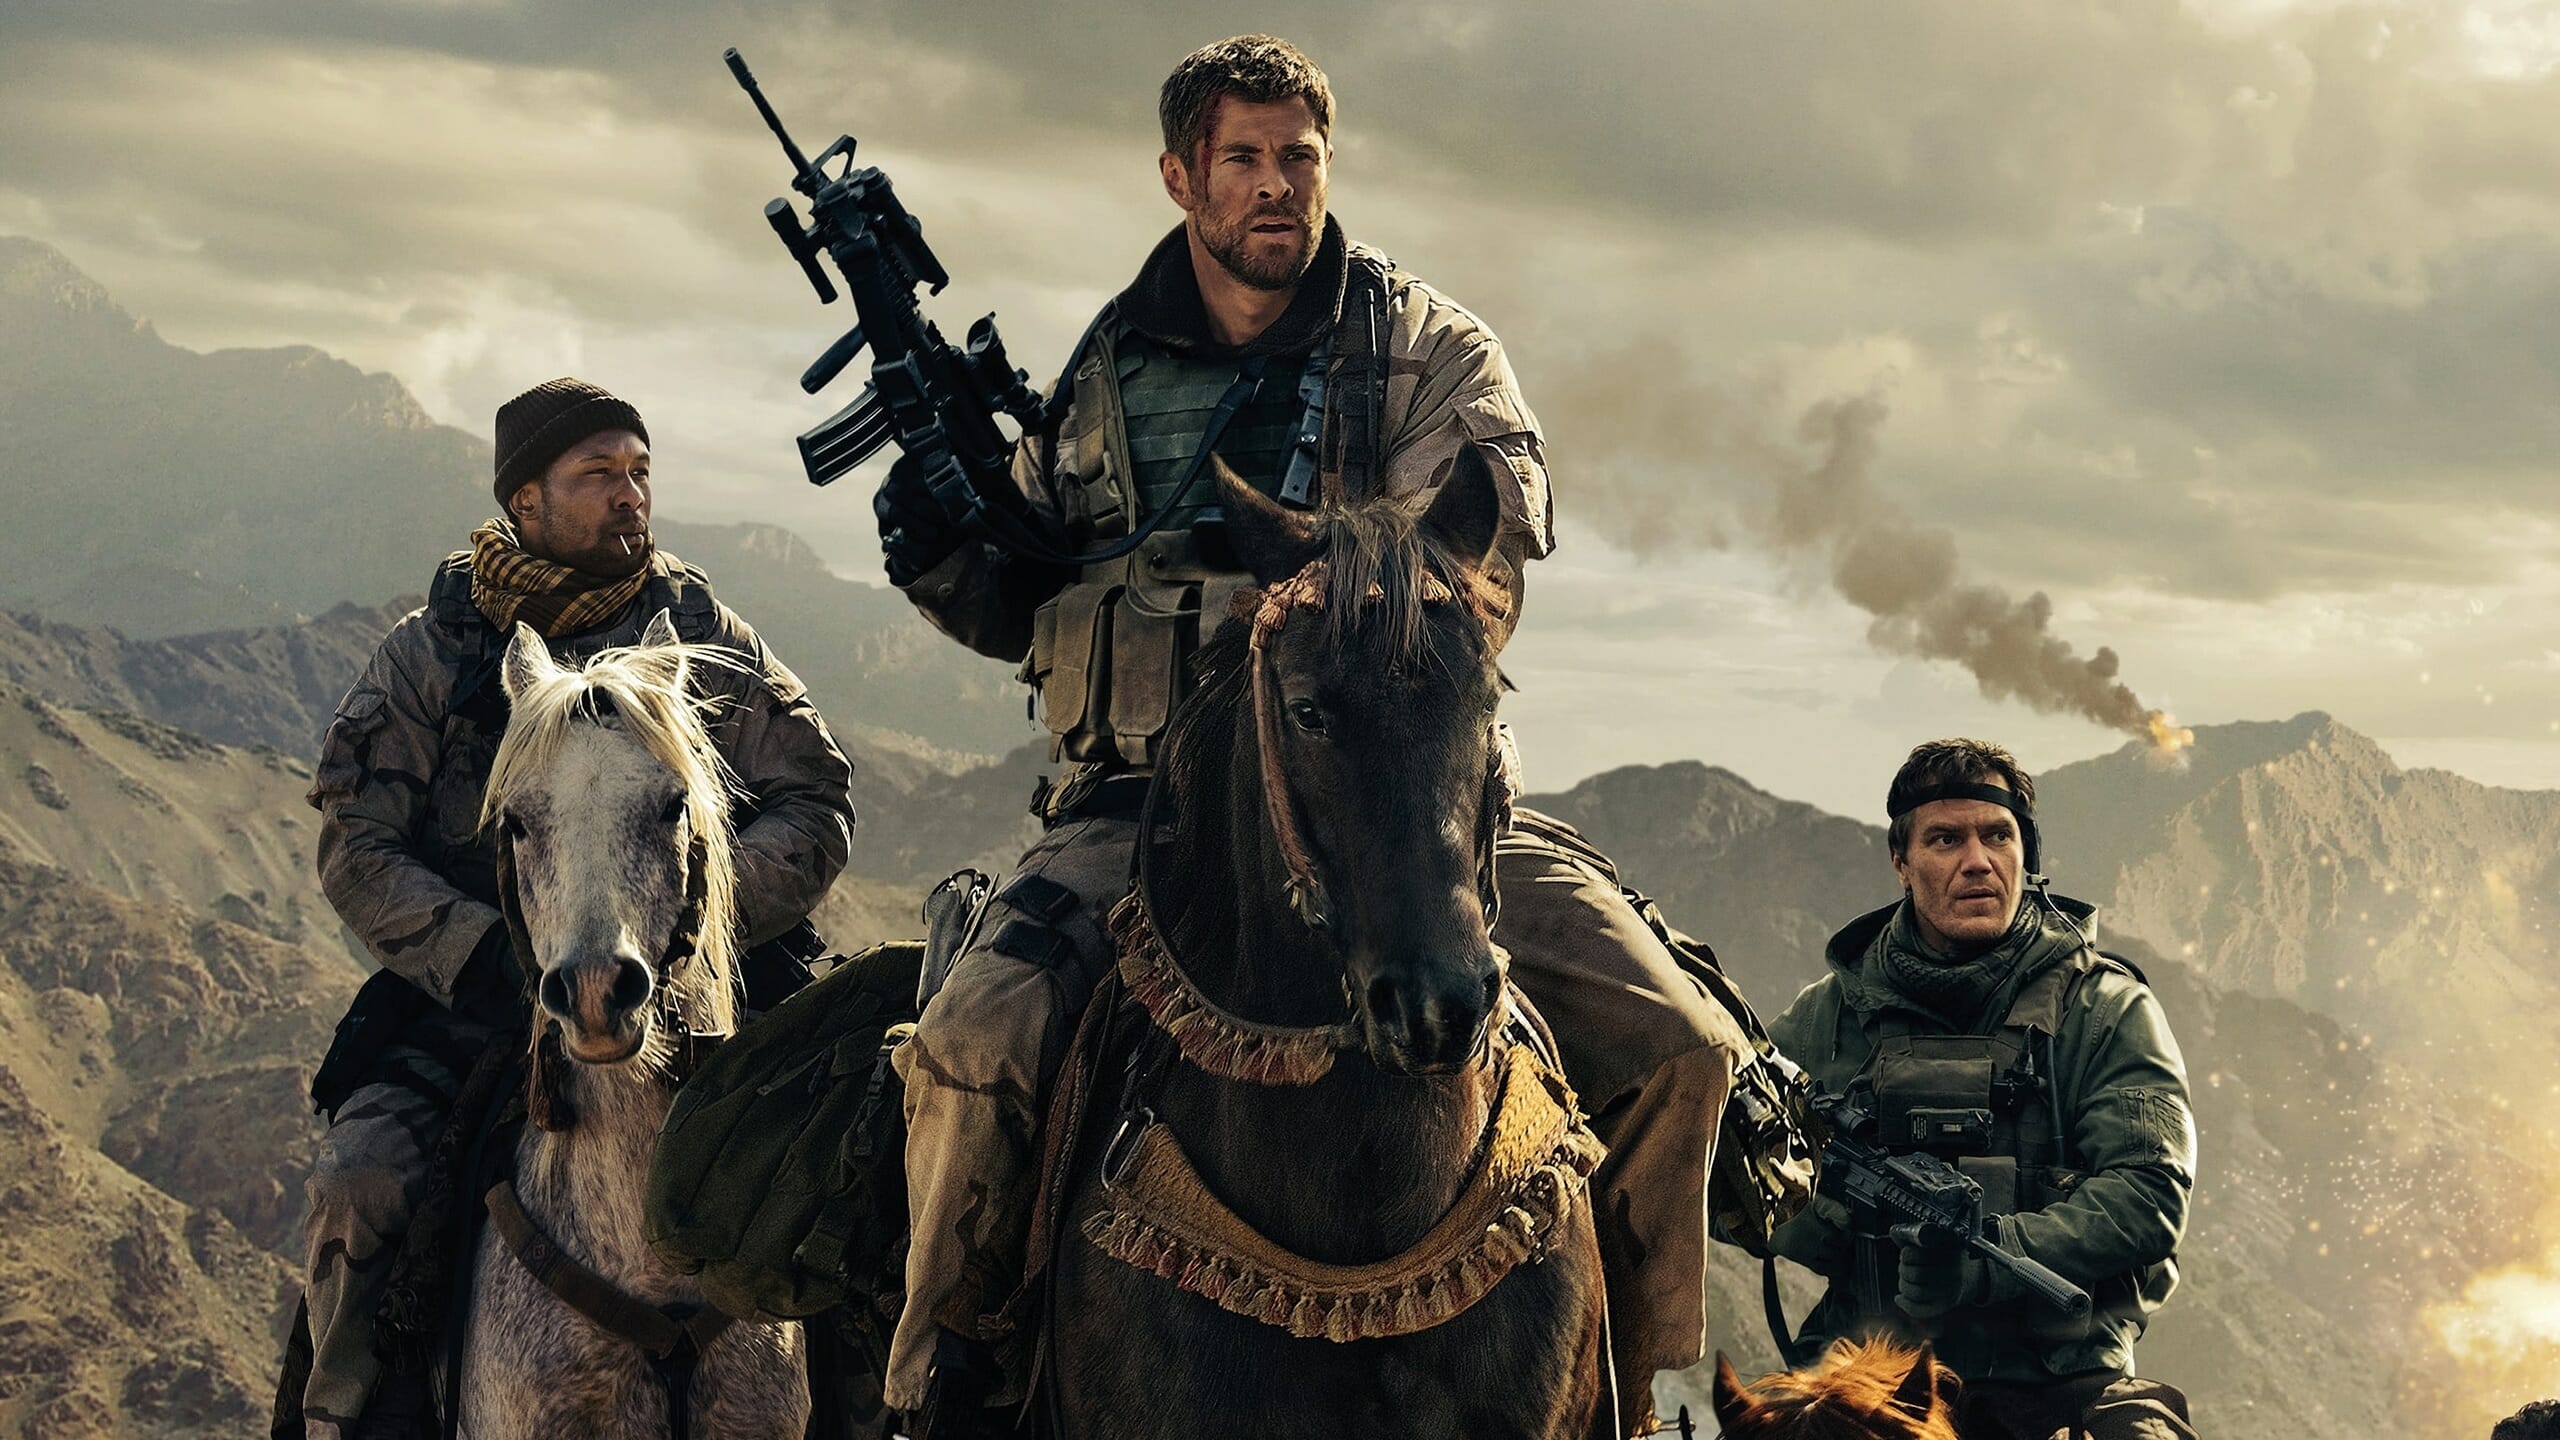 Chris Hemsworth stars in war epic 12 Strong